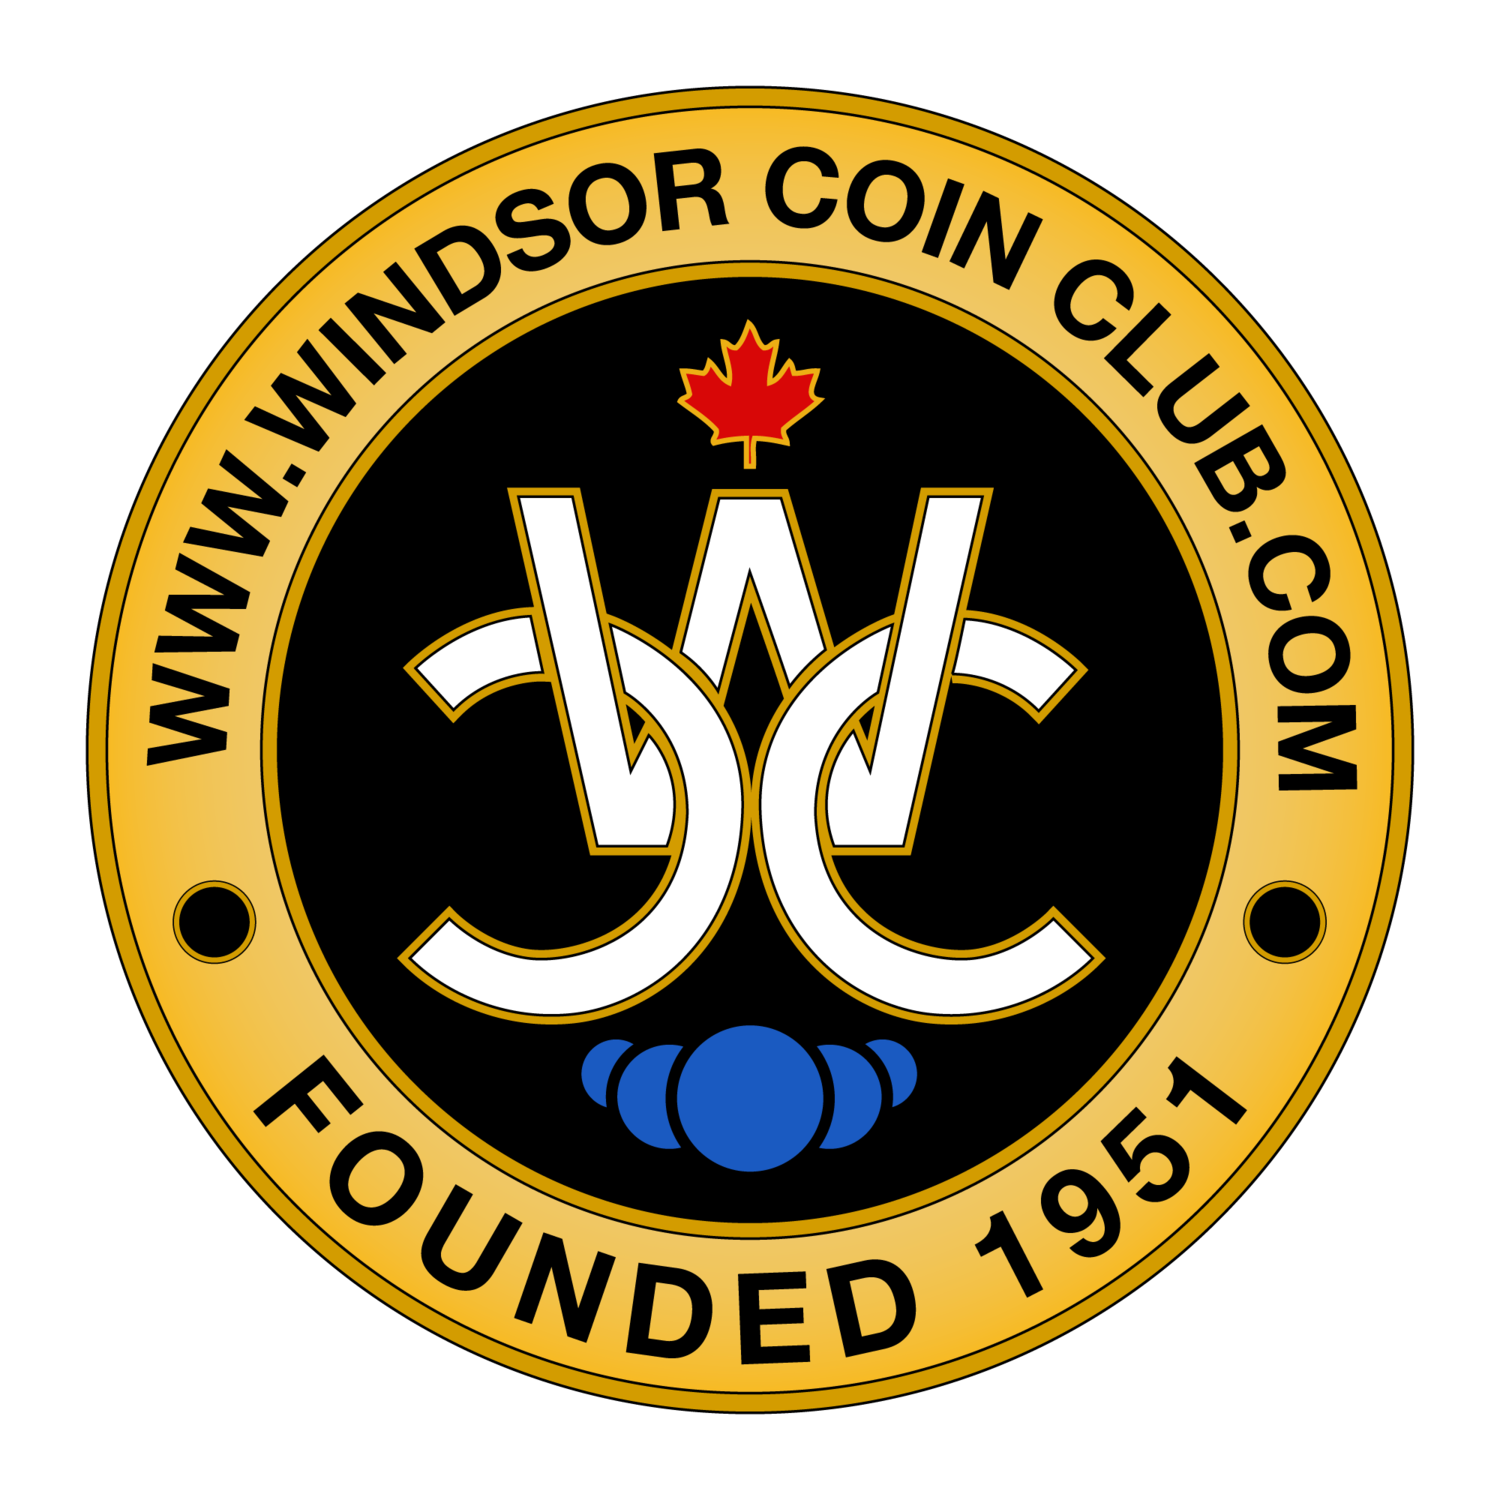 Windsor Coin Club